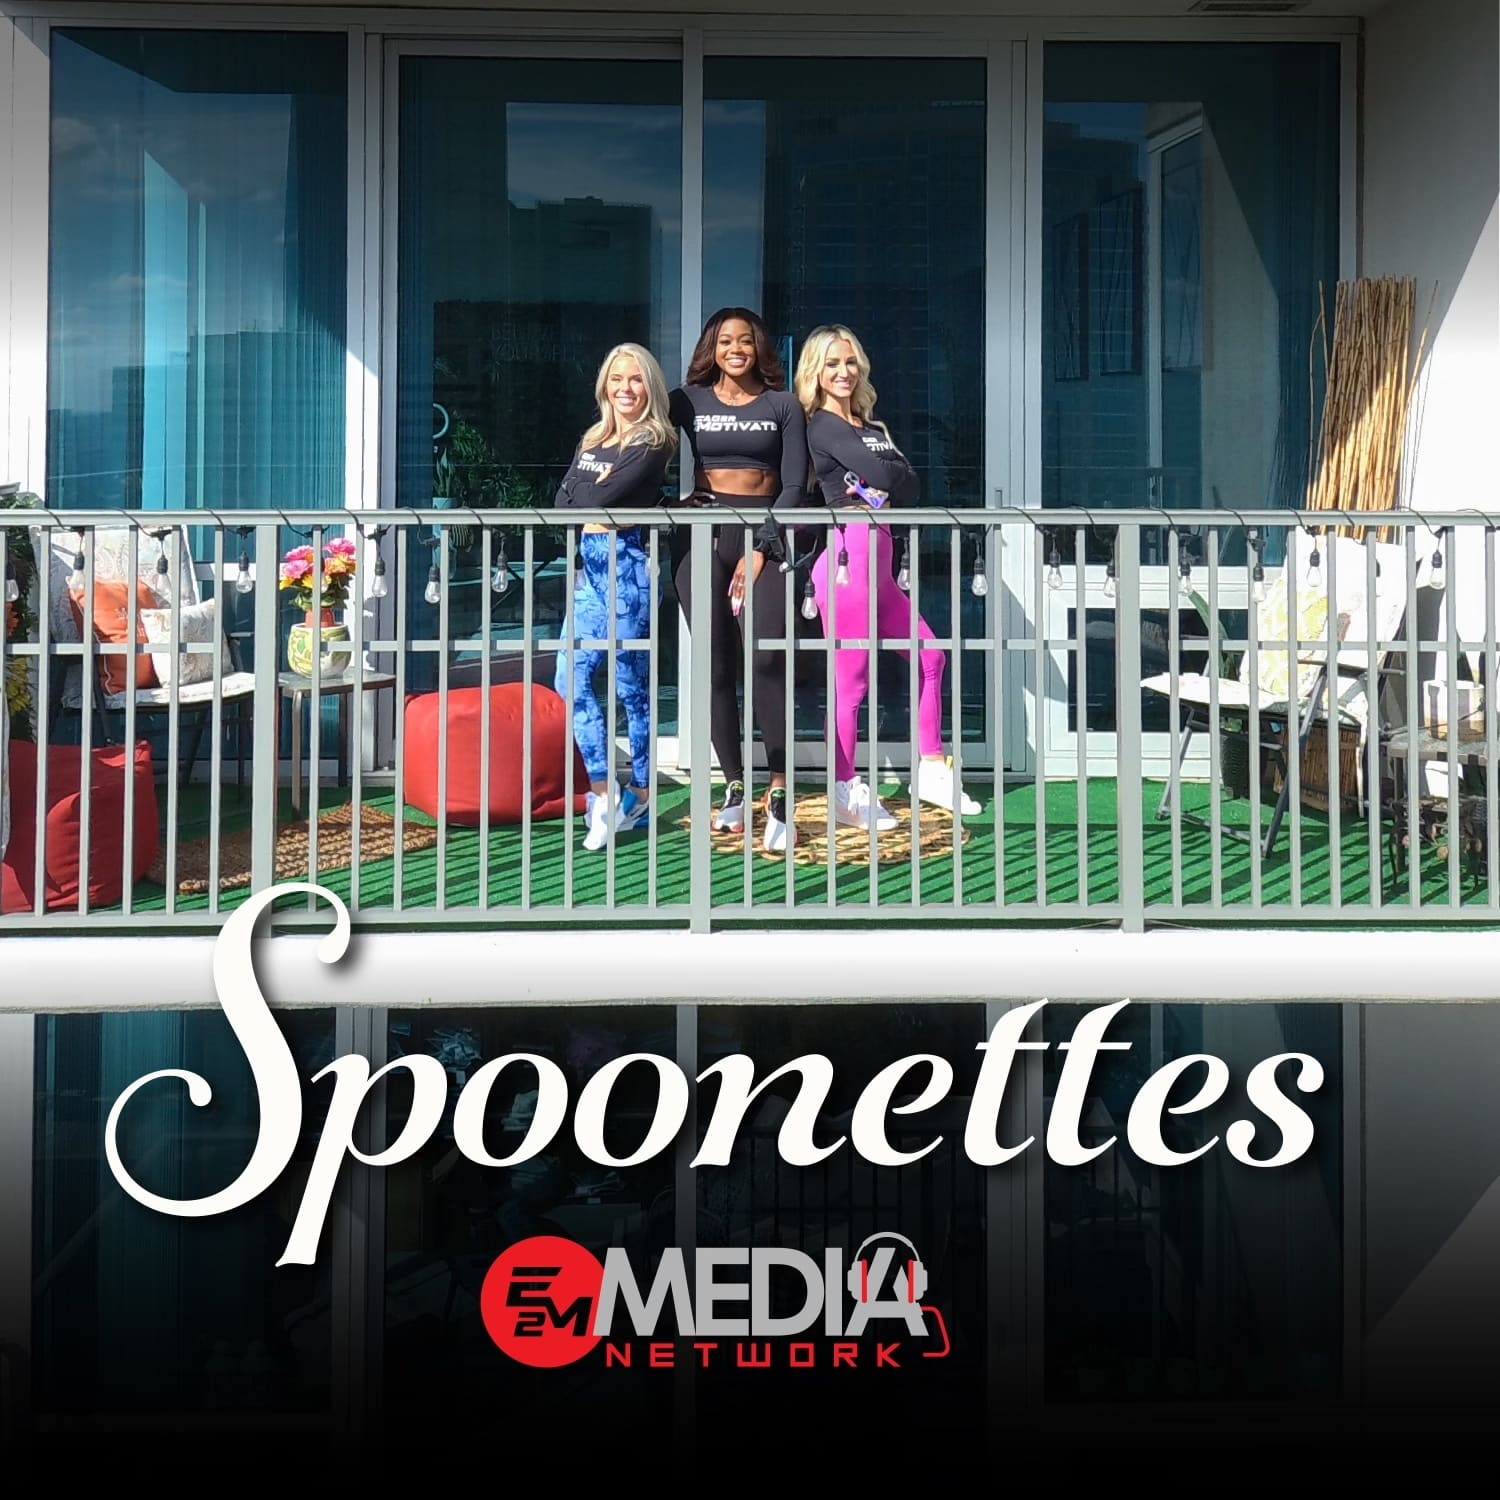 Spoonettes – Episode 6